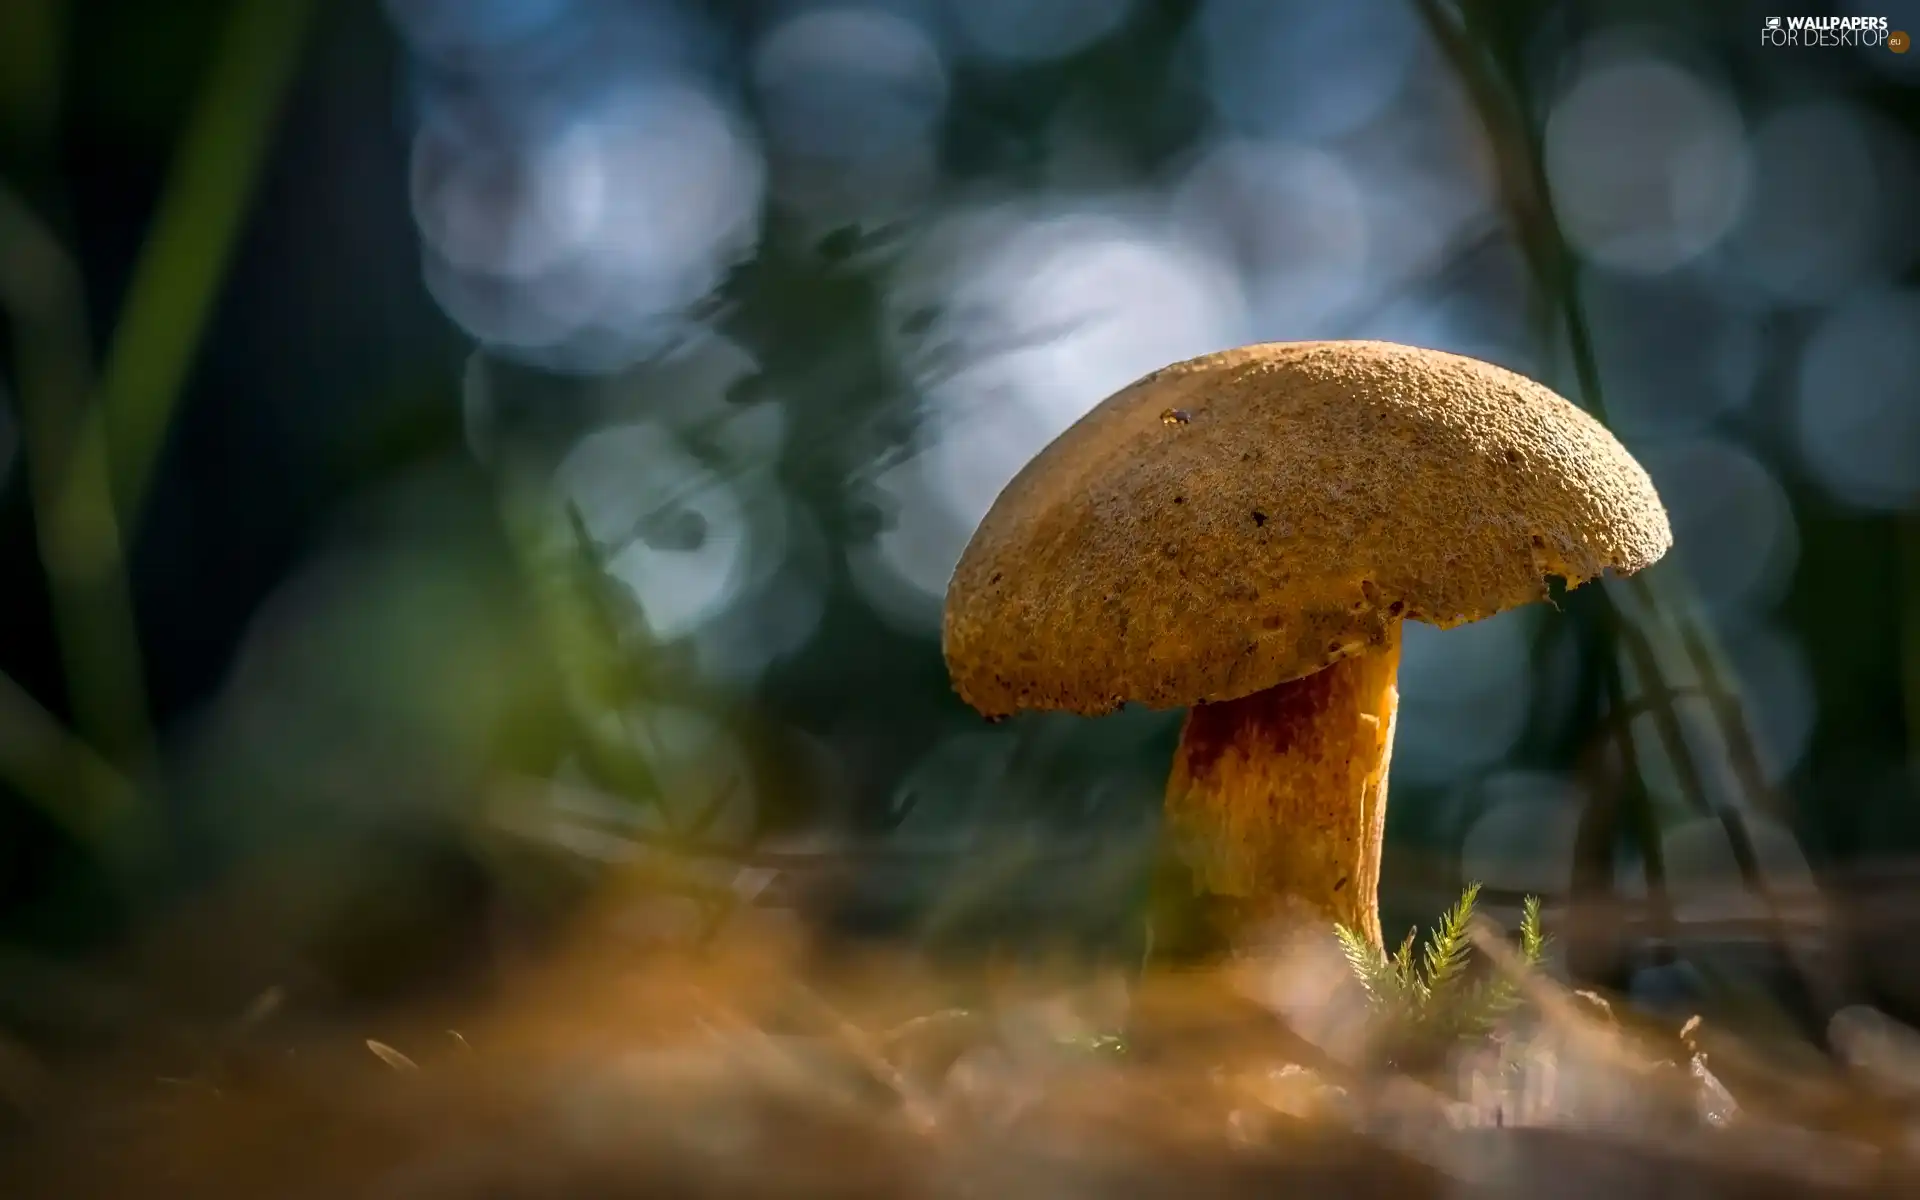 blurry background, Mushrooms, litter